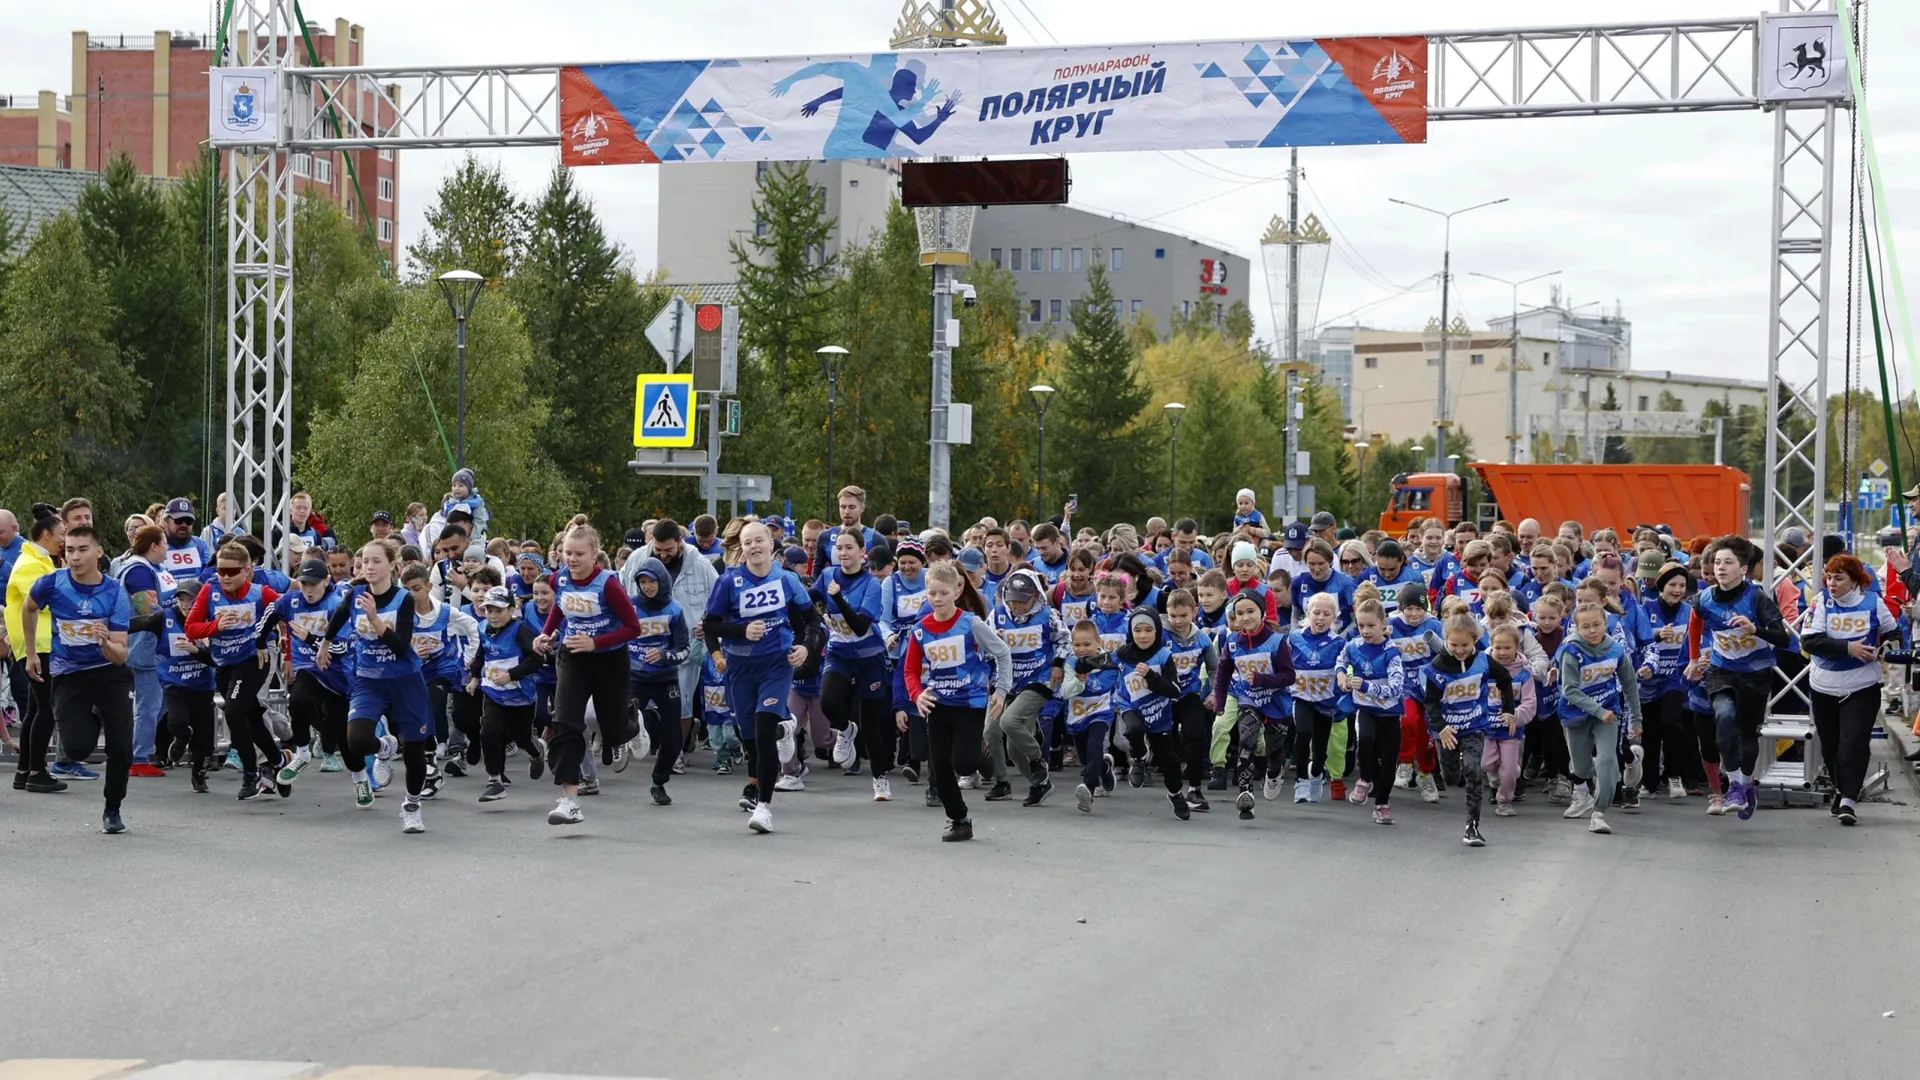 Более 800 спортсменов пробежали салехардский полумарафон. Фото: Андрей Ткачев / «Ямал-Медиа»